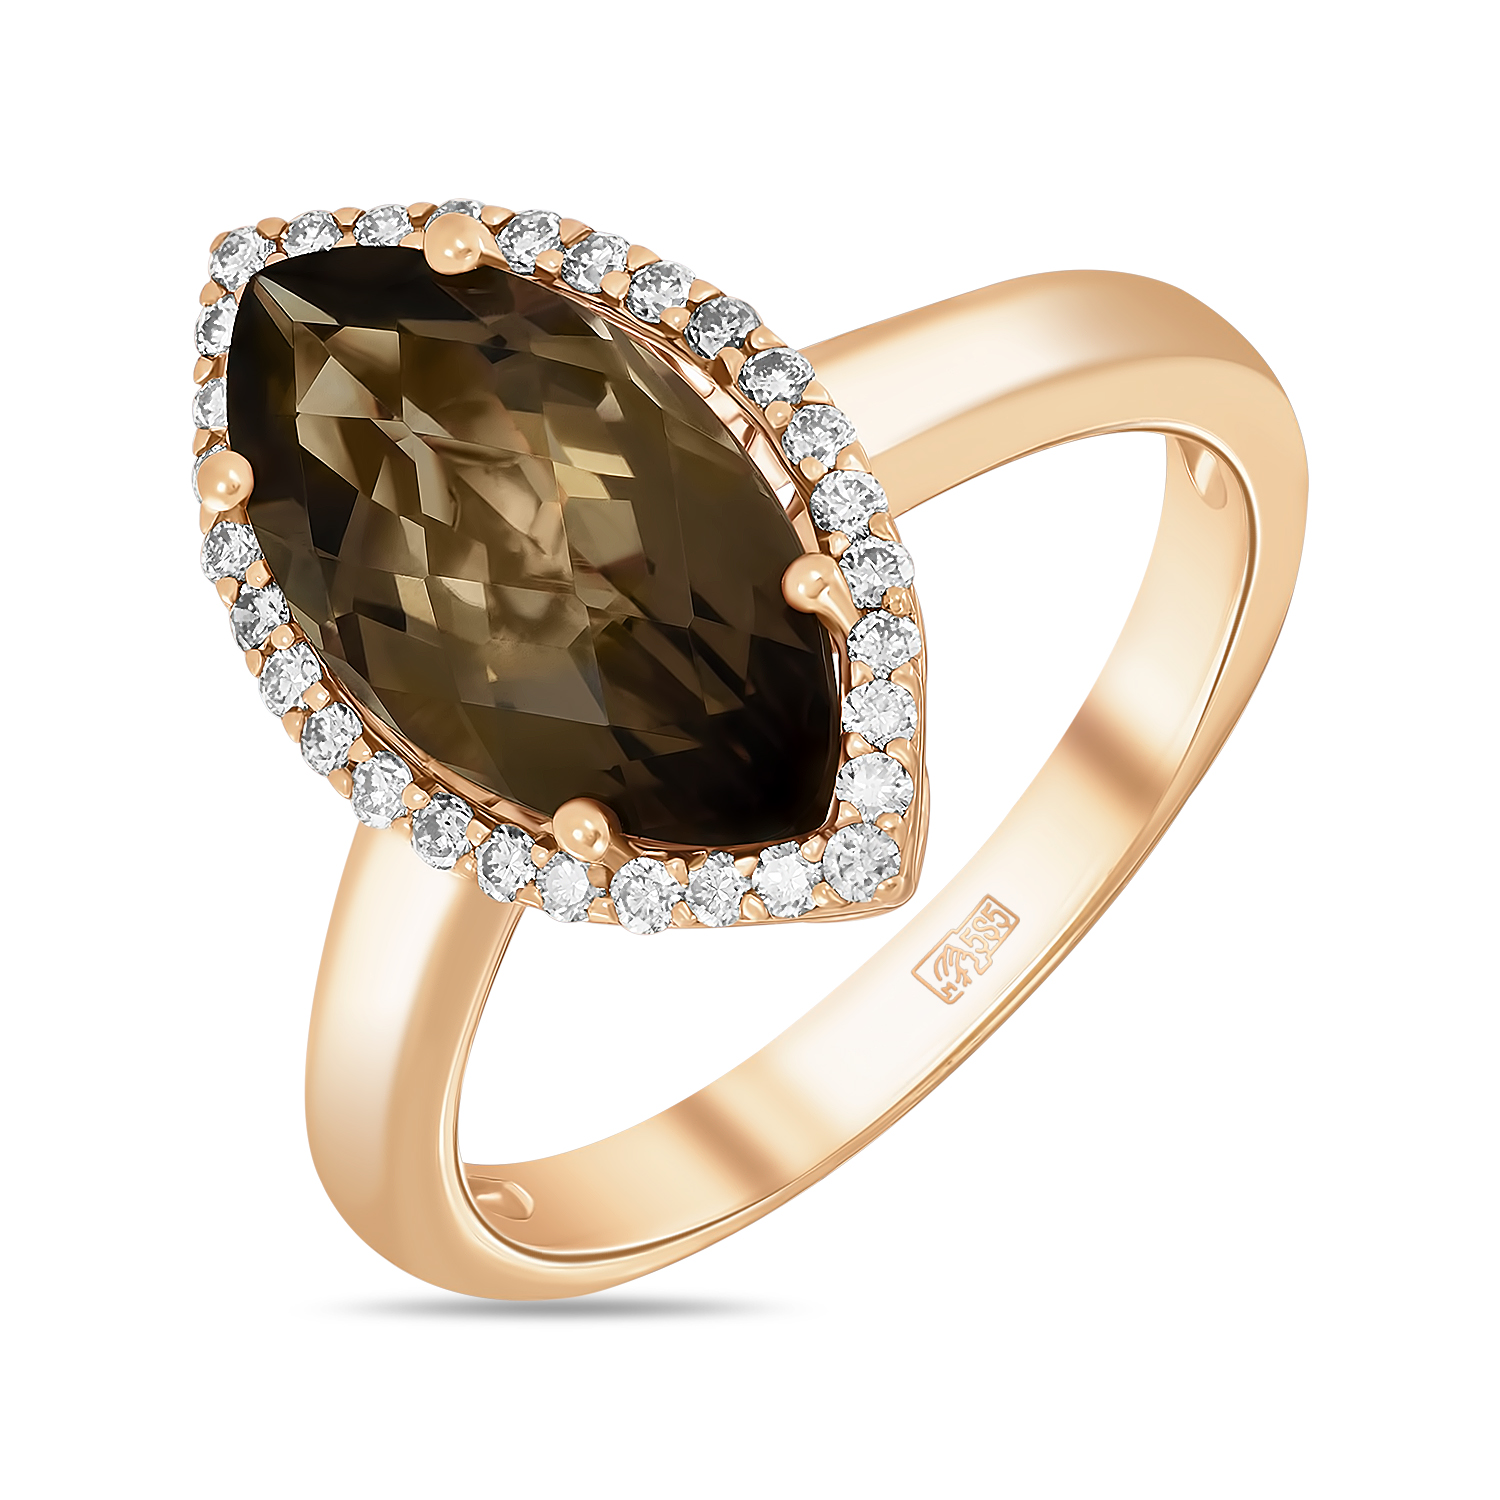 Кольца МЮЗ Золотое кольцо с бриллиантами и кварцем кольца мюз золотое кольцо с кварцем